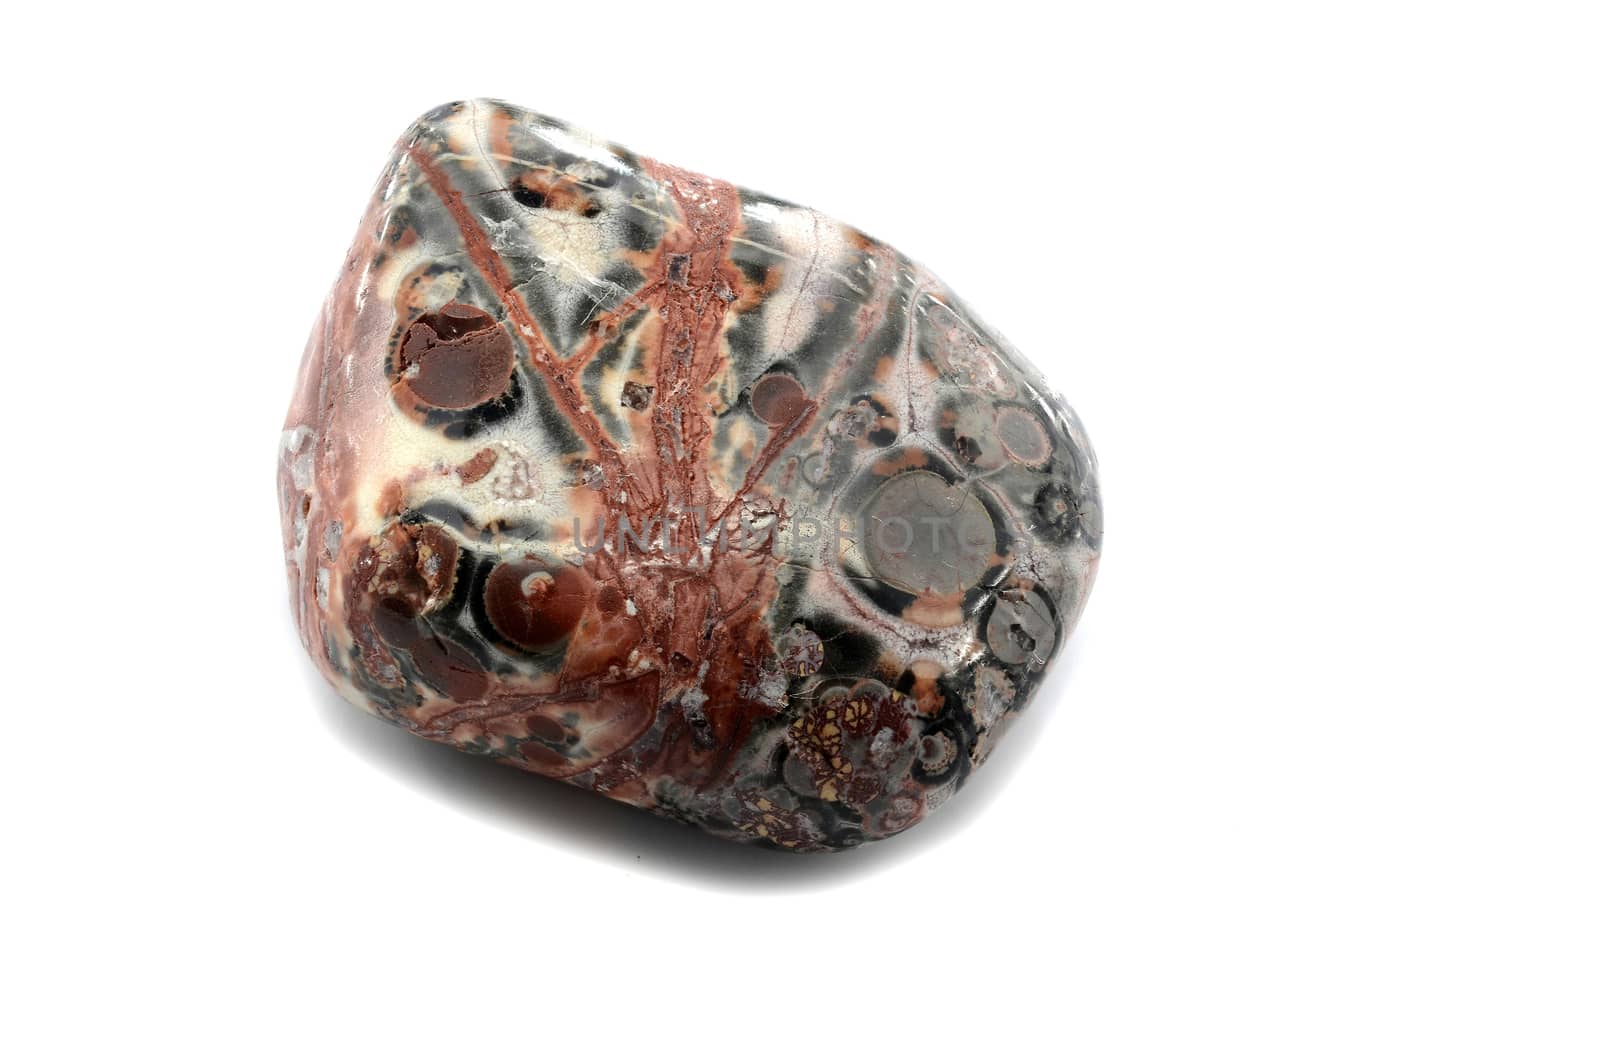 Sample of a beautiful Leopard Skin Jasper tumbled gemstone specimen isolated on white background